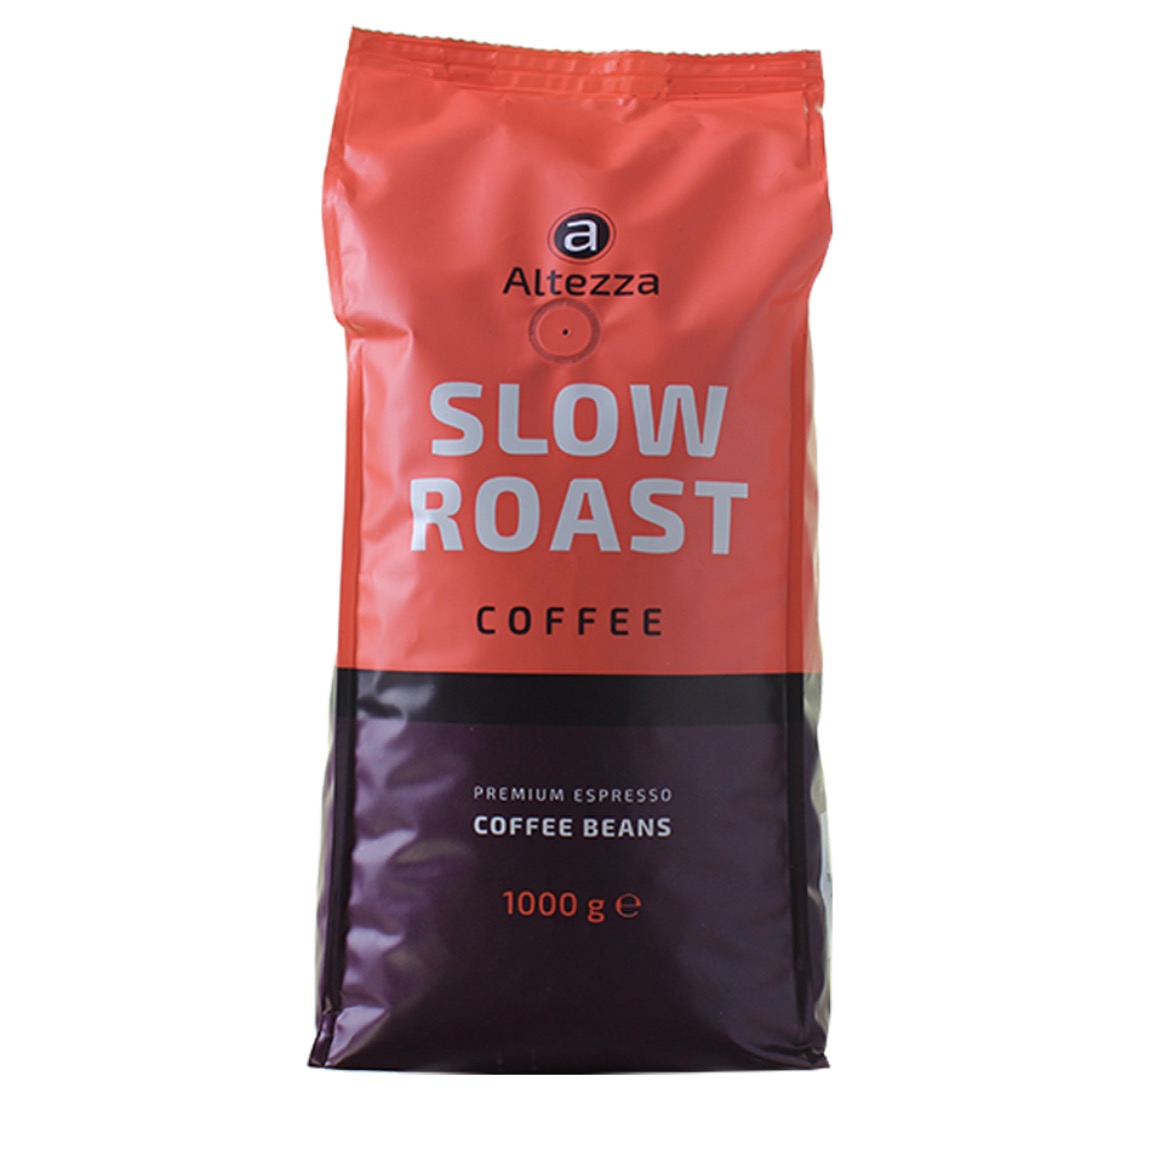 1kg Altezza Slow Roast Coffee Kaffeebohnen für 8,39€ (zzgl. Versand)